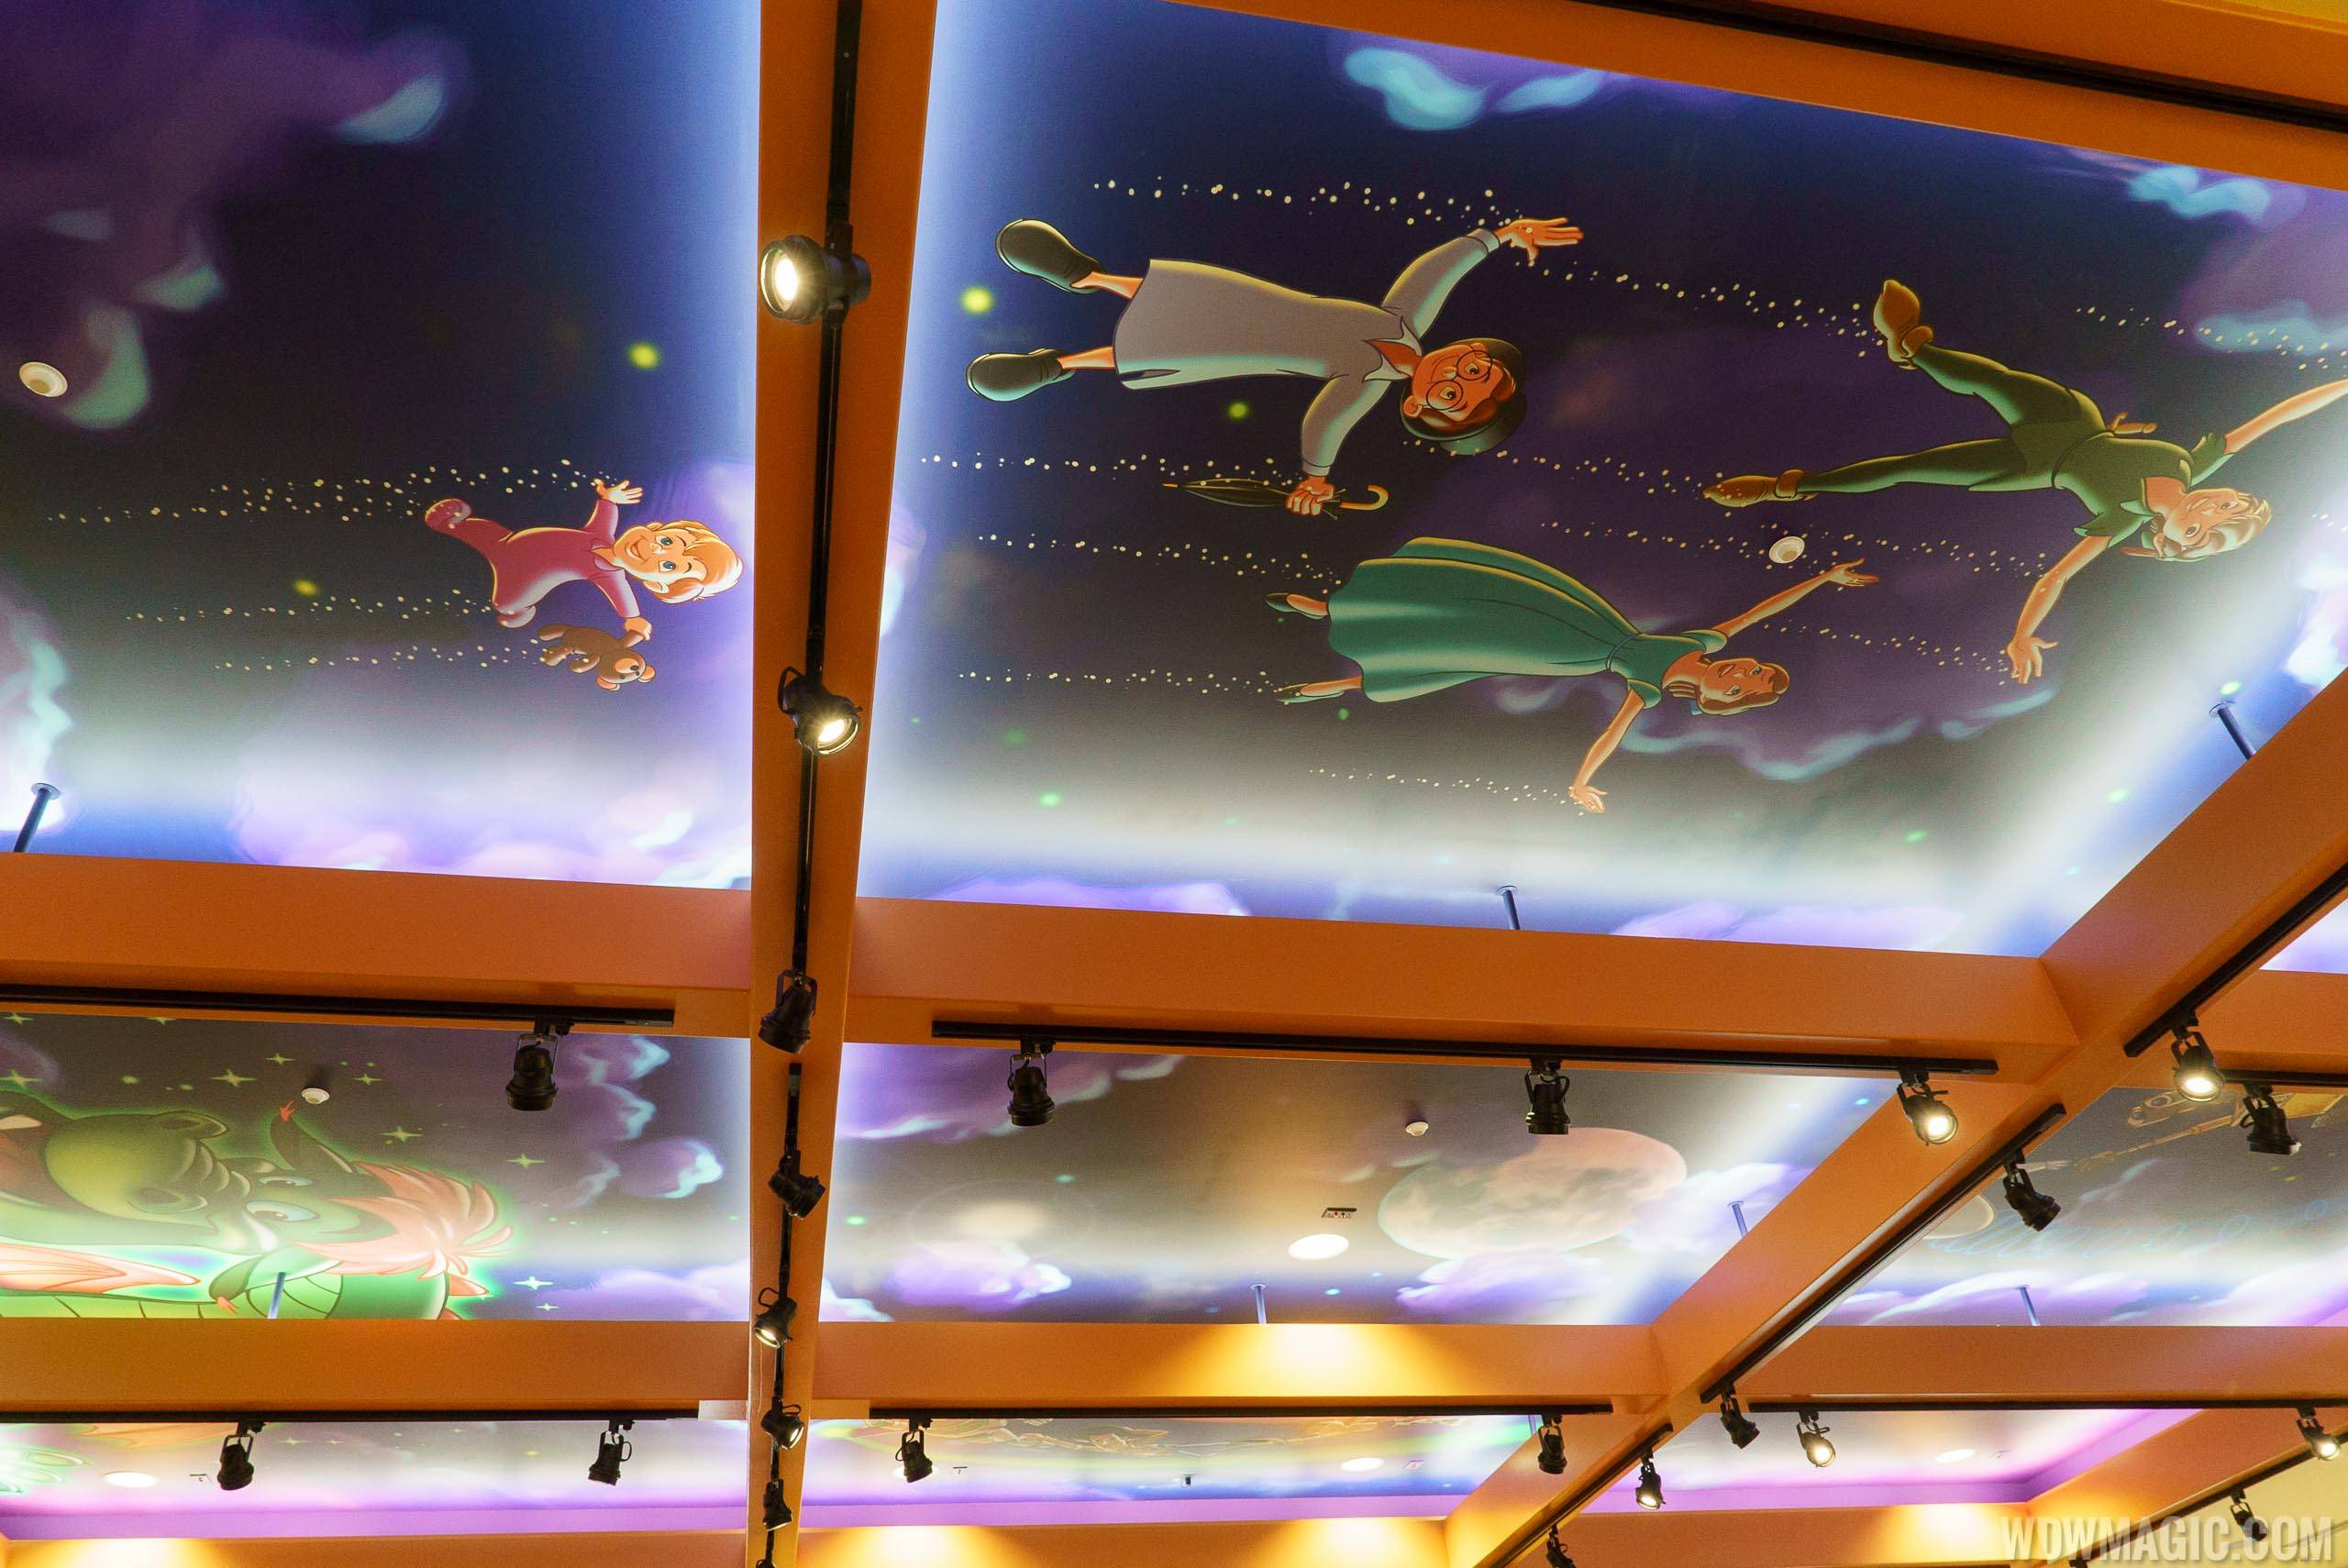 World of Disney expansion - Ceiling details